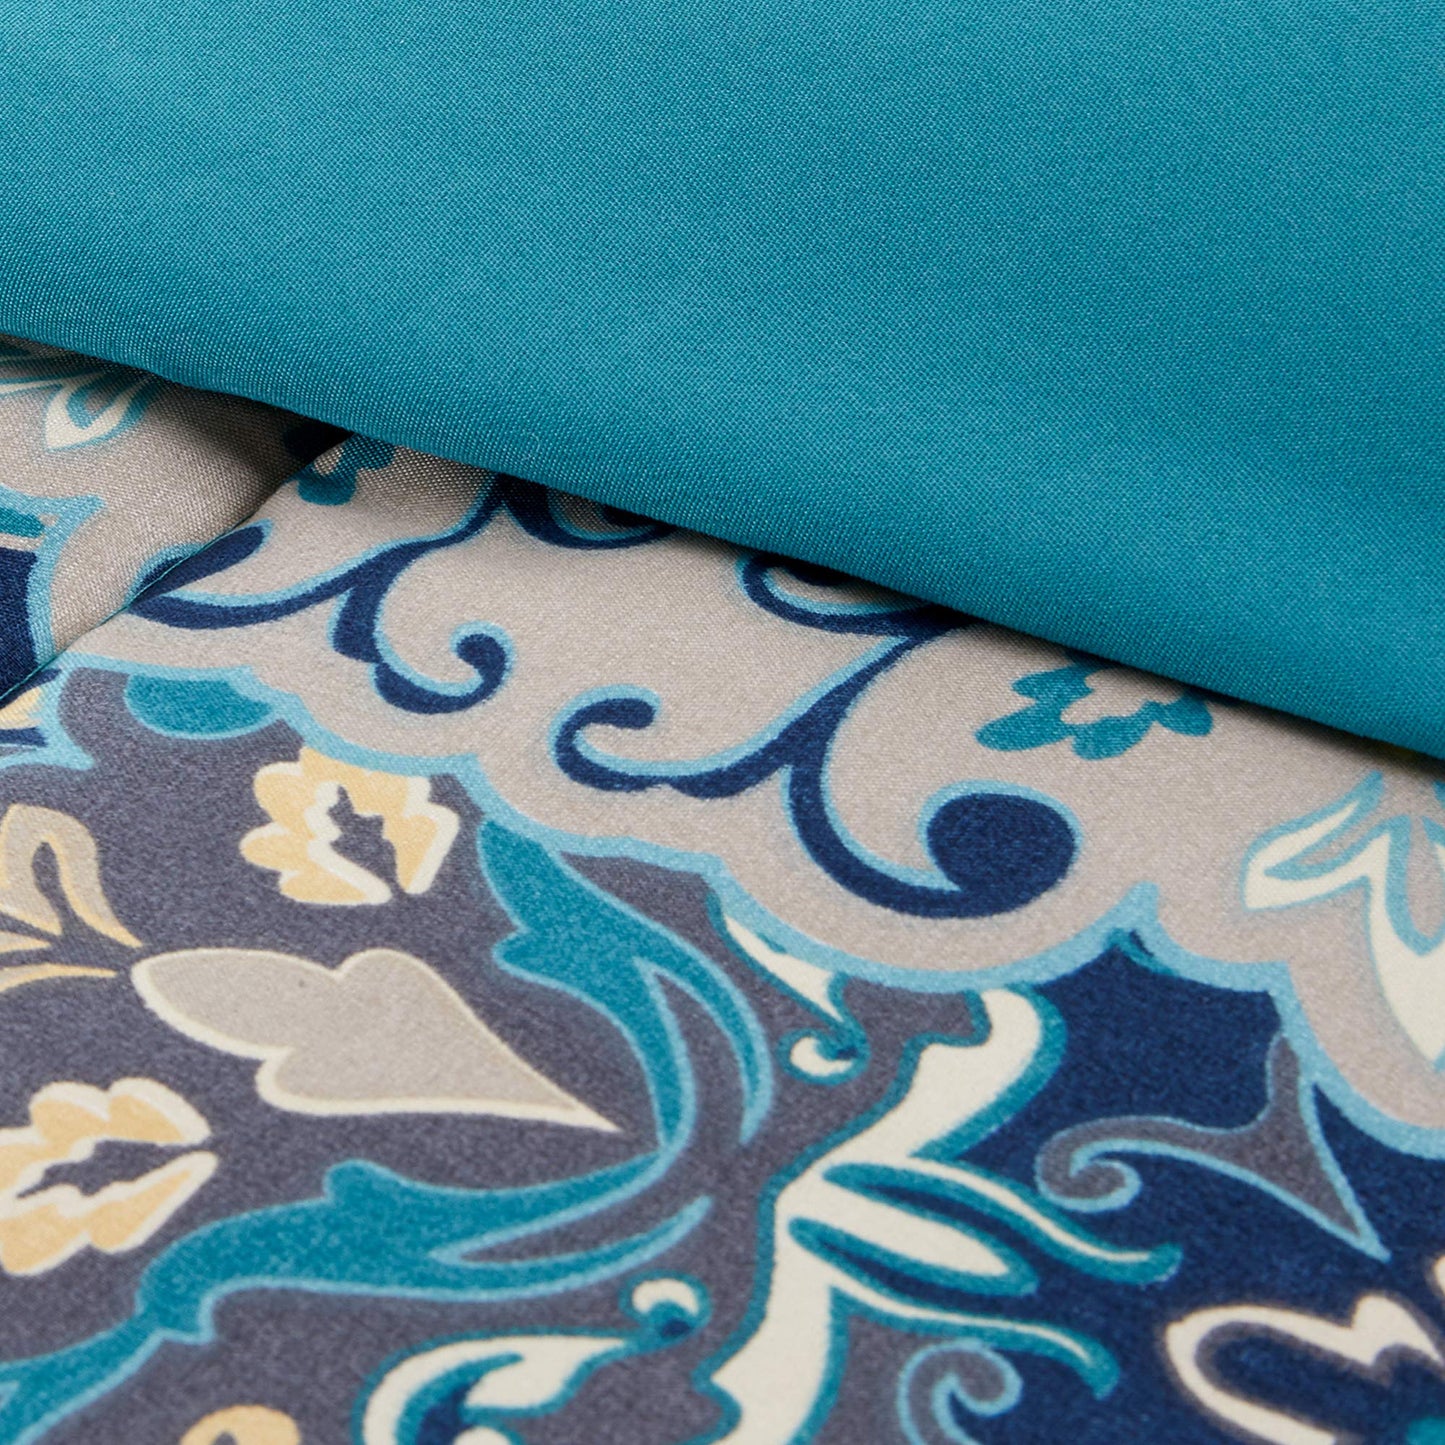 Modern Threads - Granada Collection Comforter Set - Reversible Microfiber - Elegant Printed Bed Set - Includes Comforter, Sheets, Shams, & Pillow - Luxurious Bedding